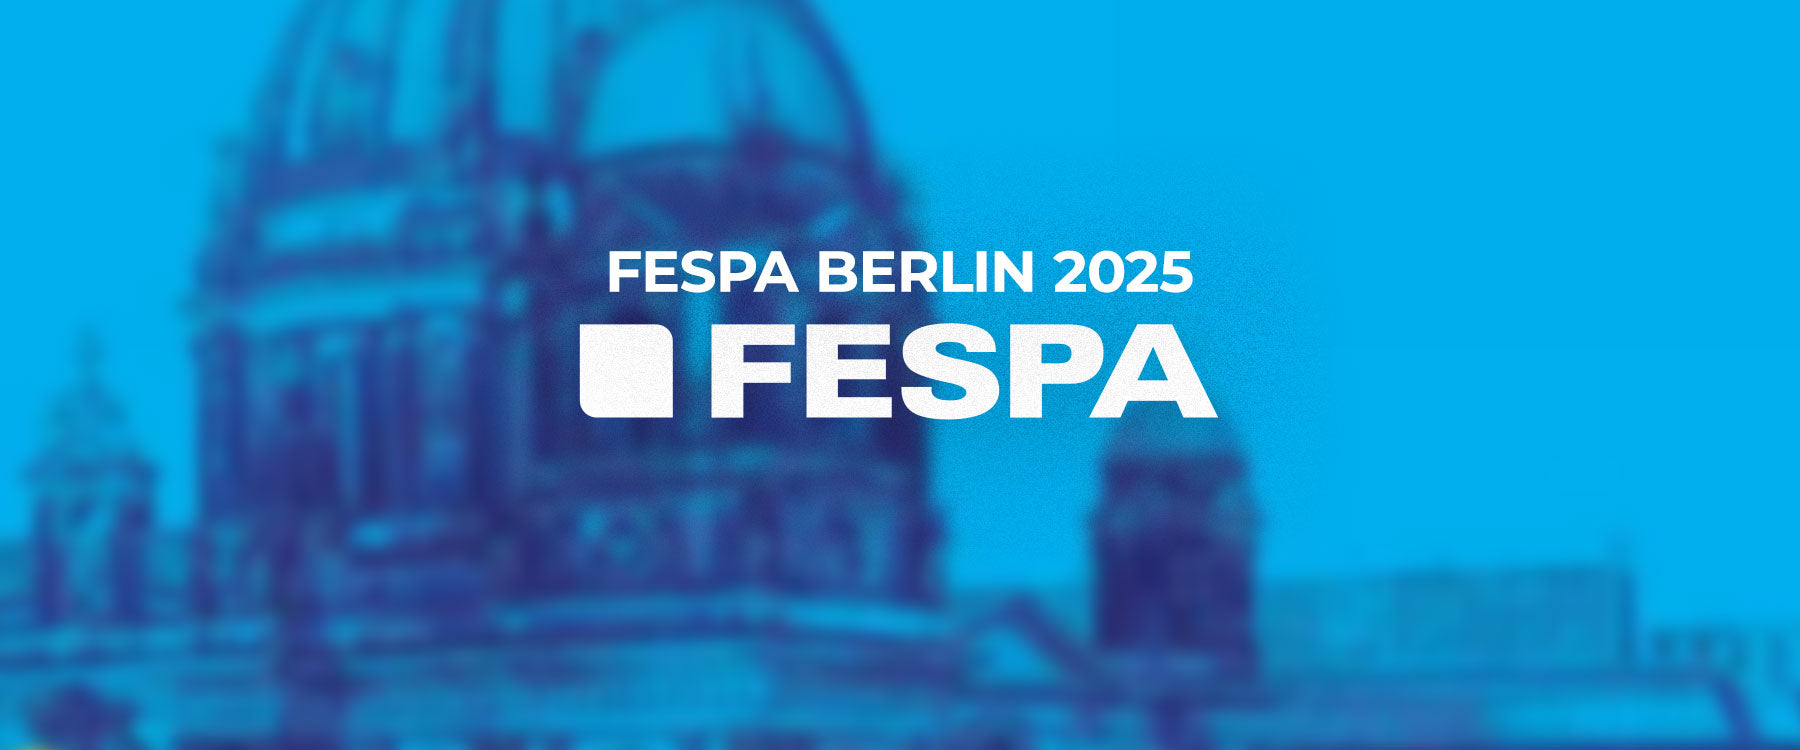 Where and when FESPA 2025?